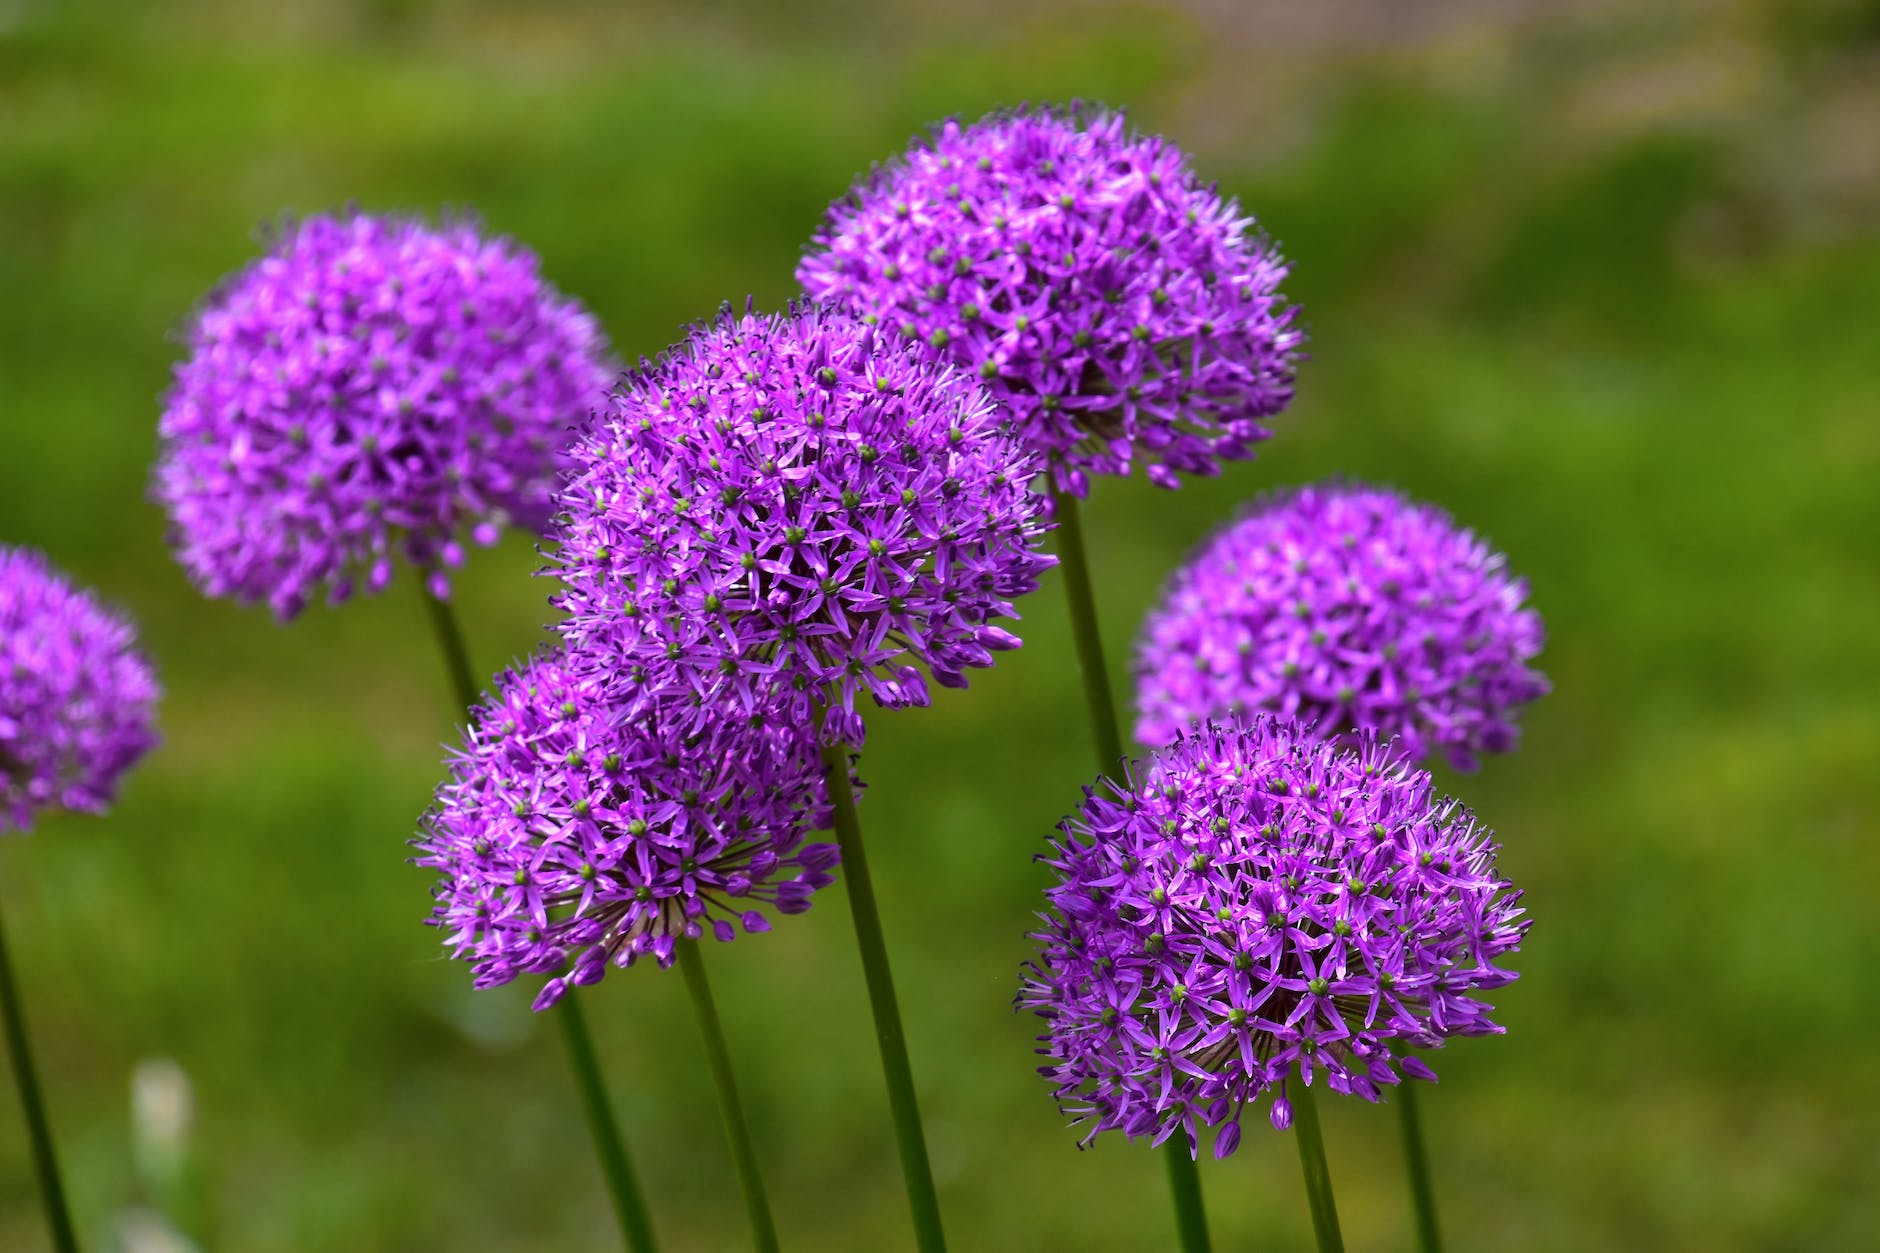 purple allium flowers in close up photography